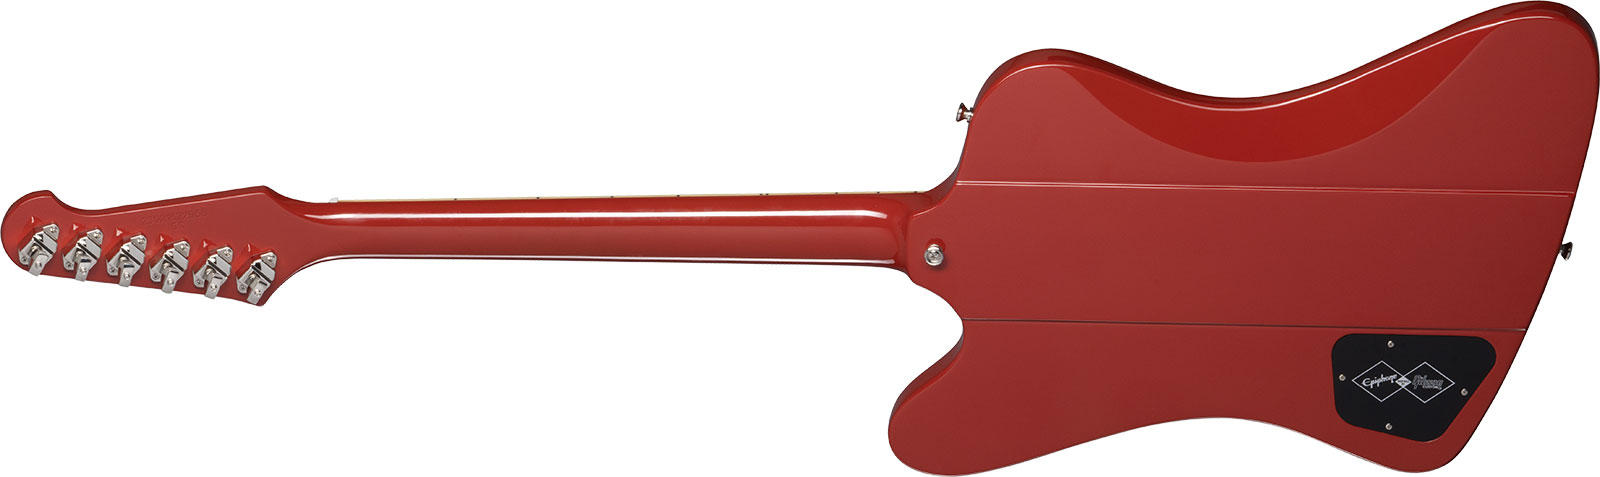 Epiphone Firebird V 1963 Maestro Vibrola Inspired By Gibson Custom 2mh Trem Lau - Ember Red - Guitarra electrica retro rock - Variation 1